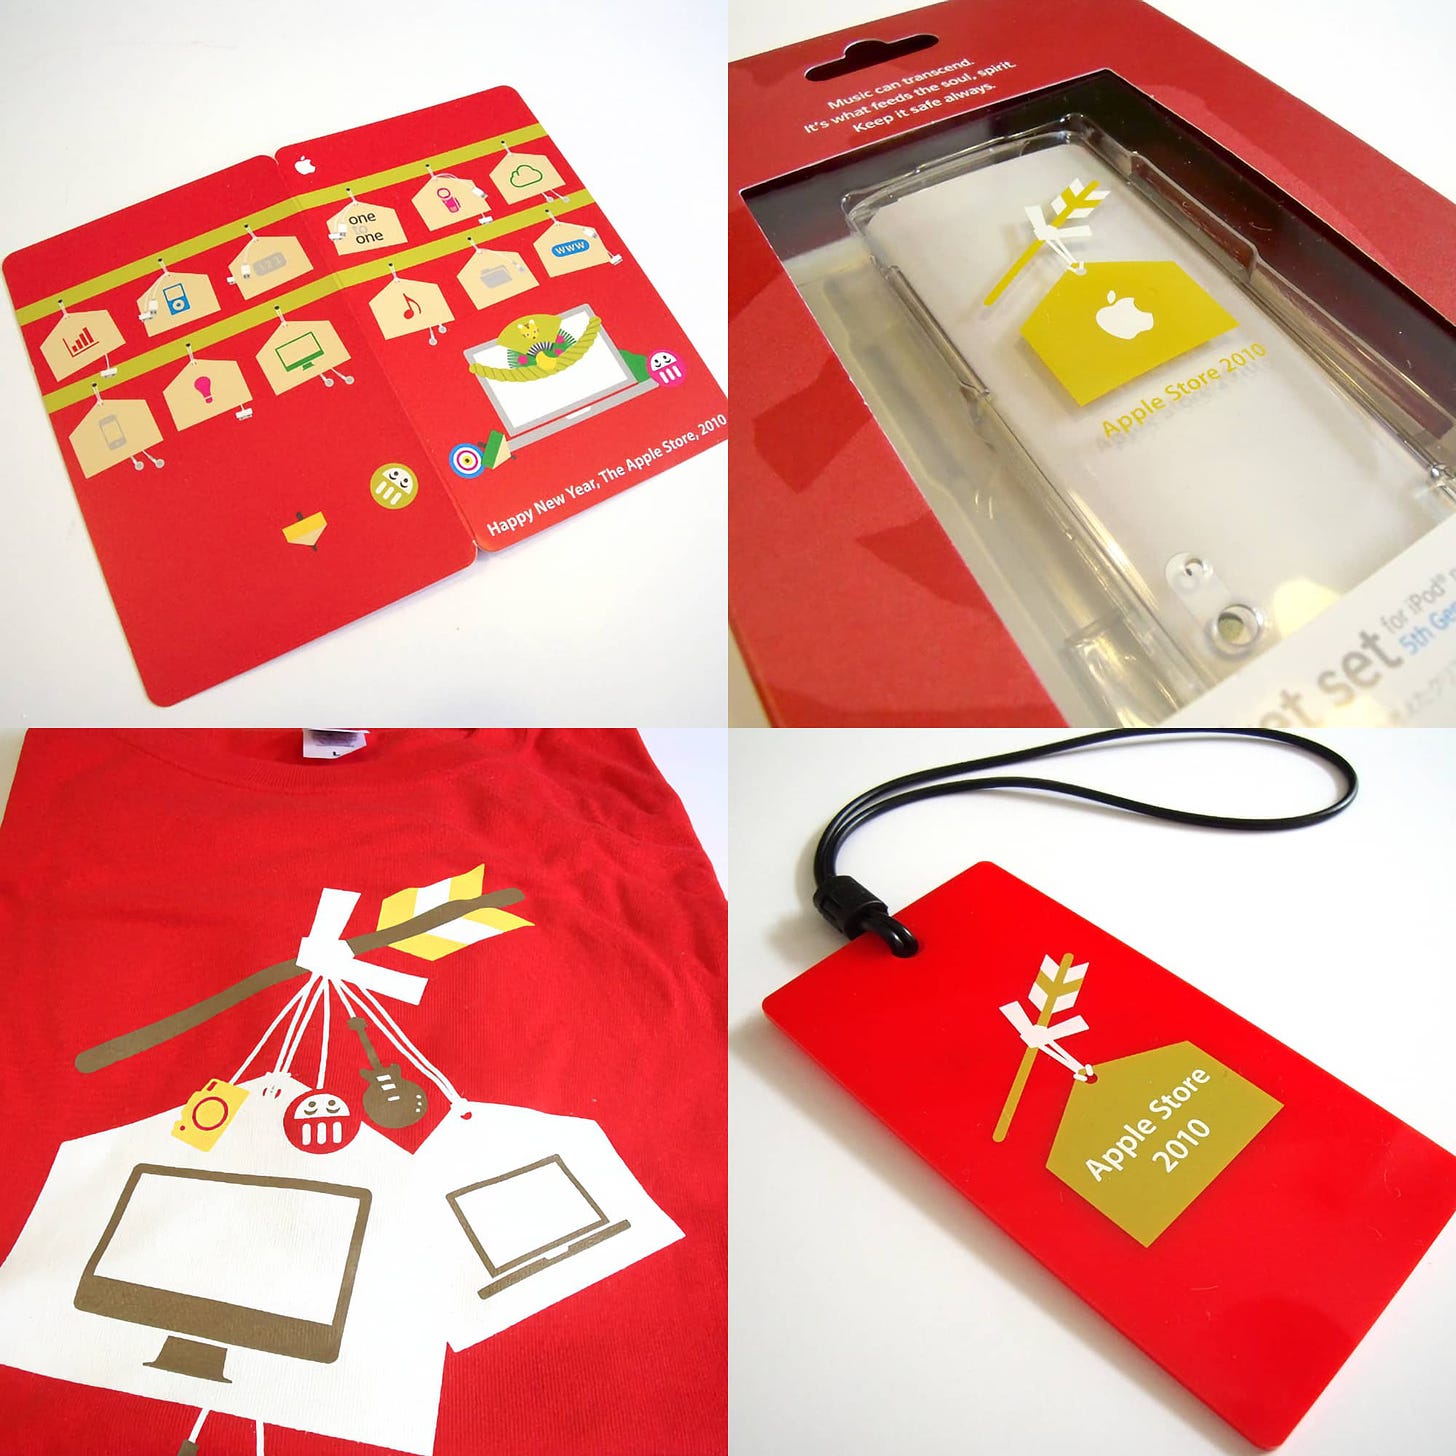 2010 Souvenirs: A calendar, iPod nano case, t-shirt, and tag.